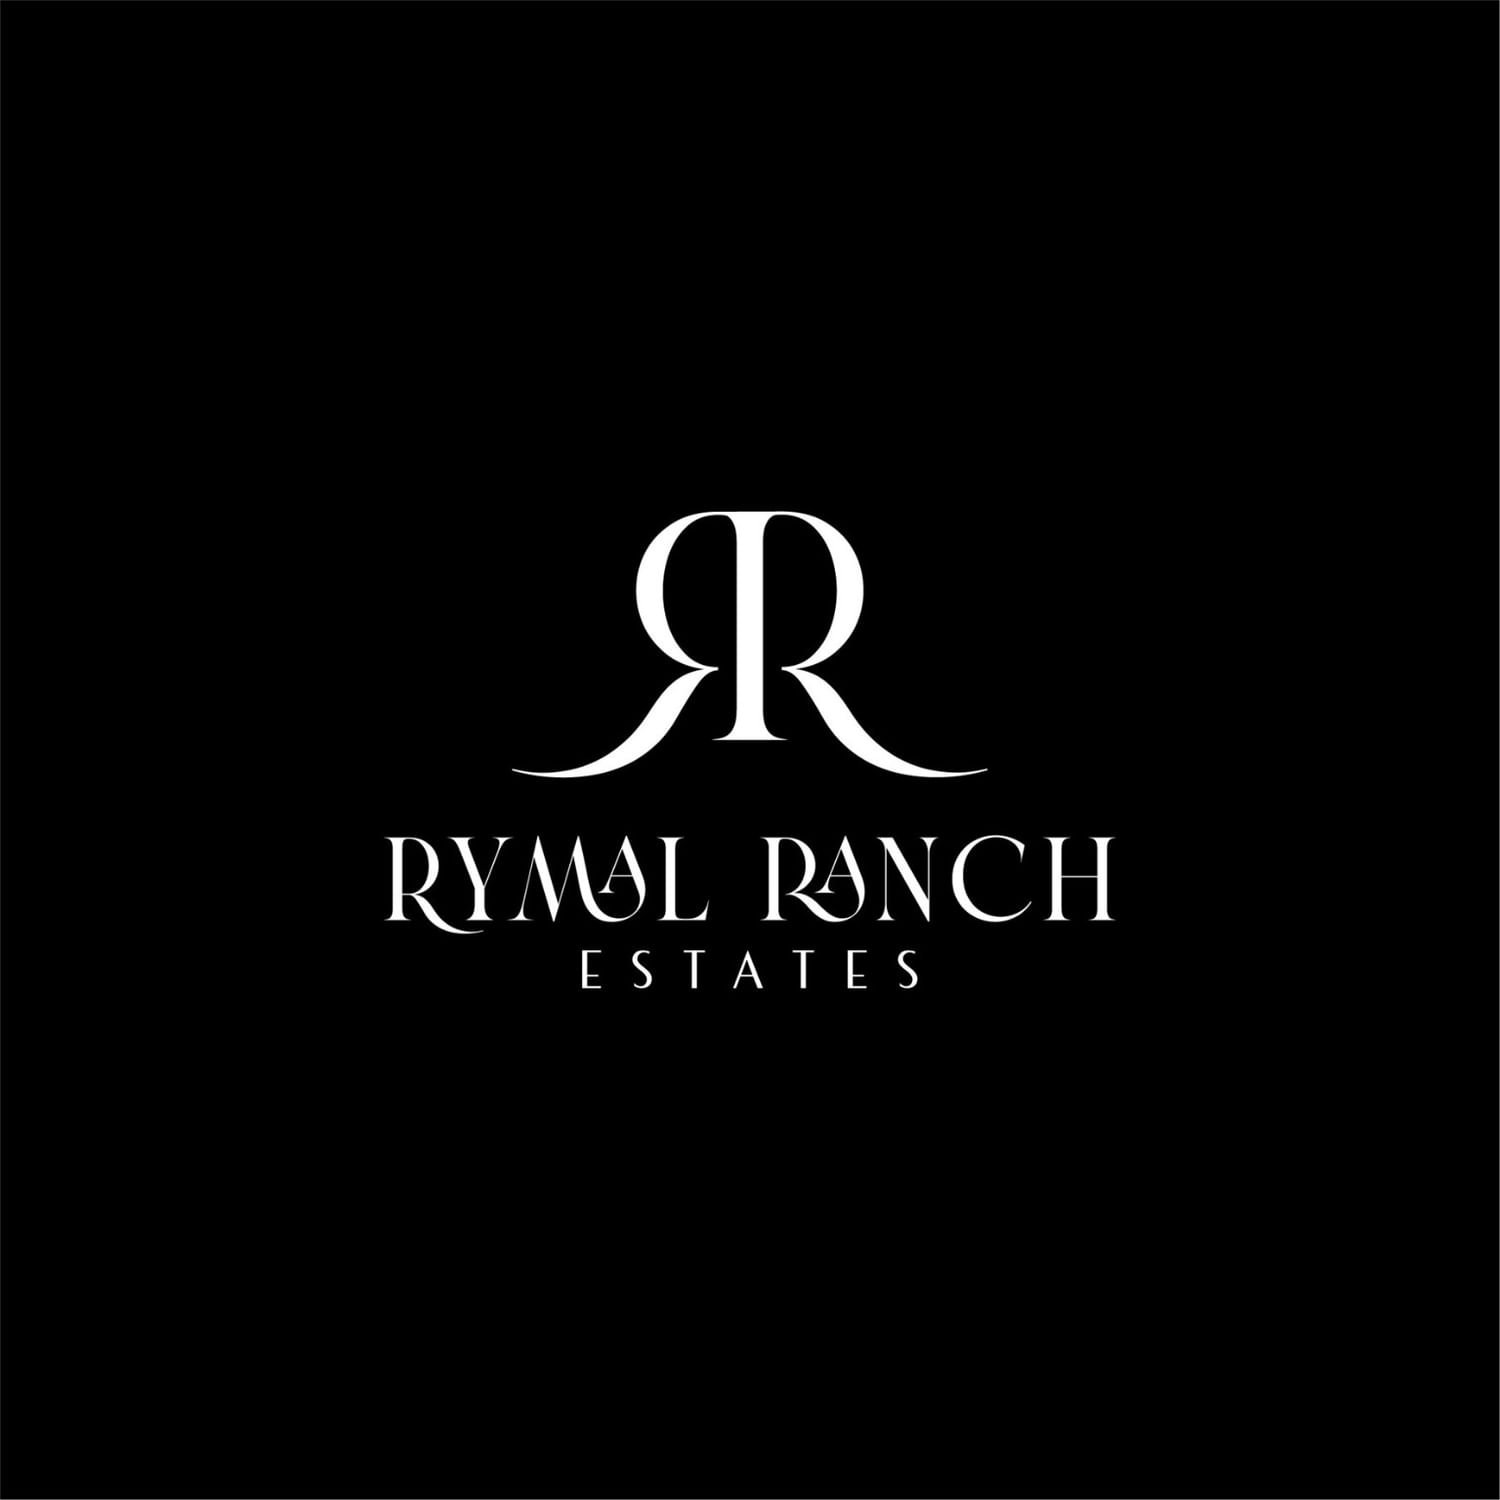 Real estate property located at TBD Rymal Ranch Road, Galveston, Rymal Ranch Estates, Algoa, TX, US